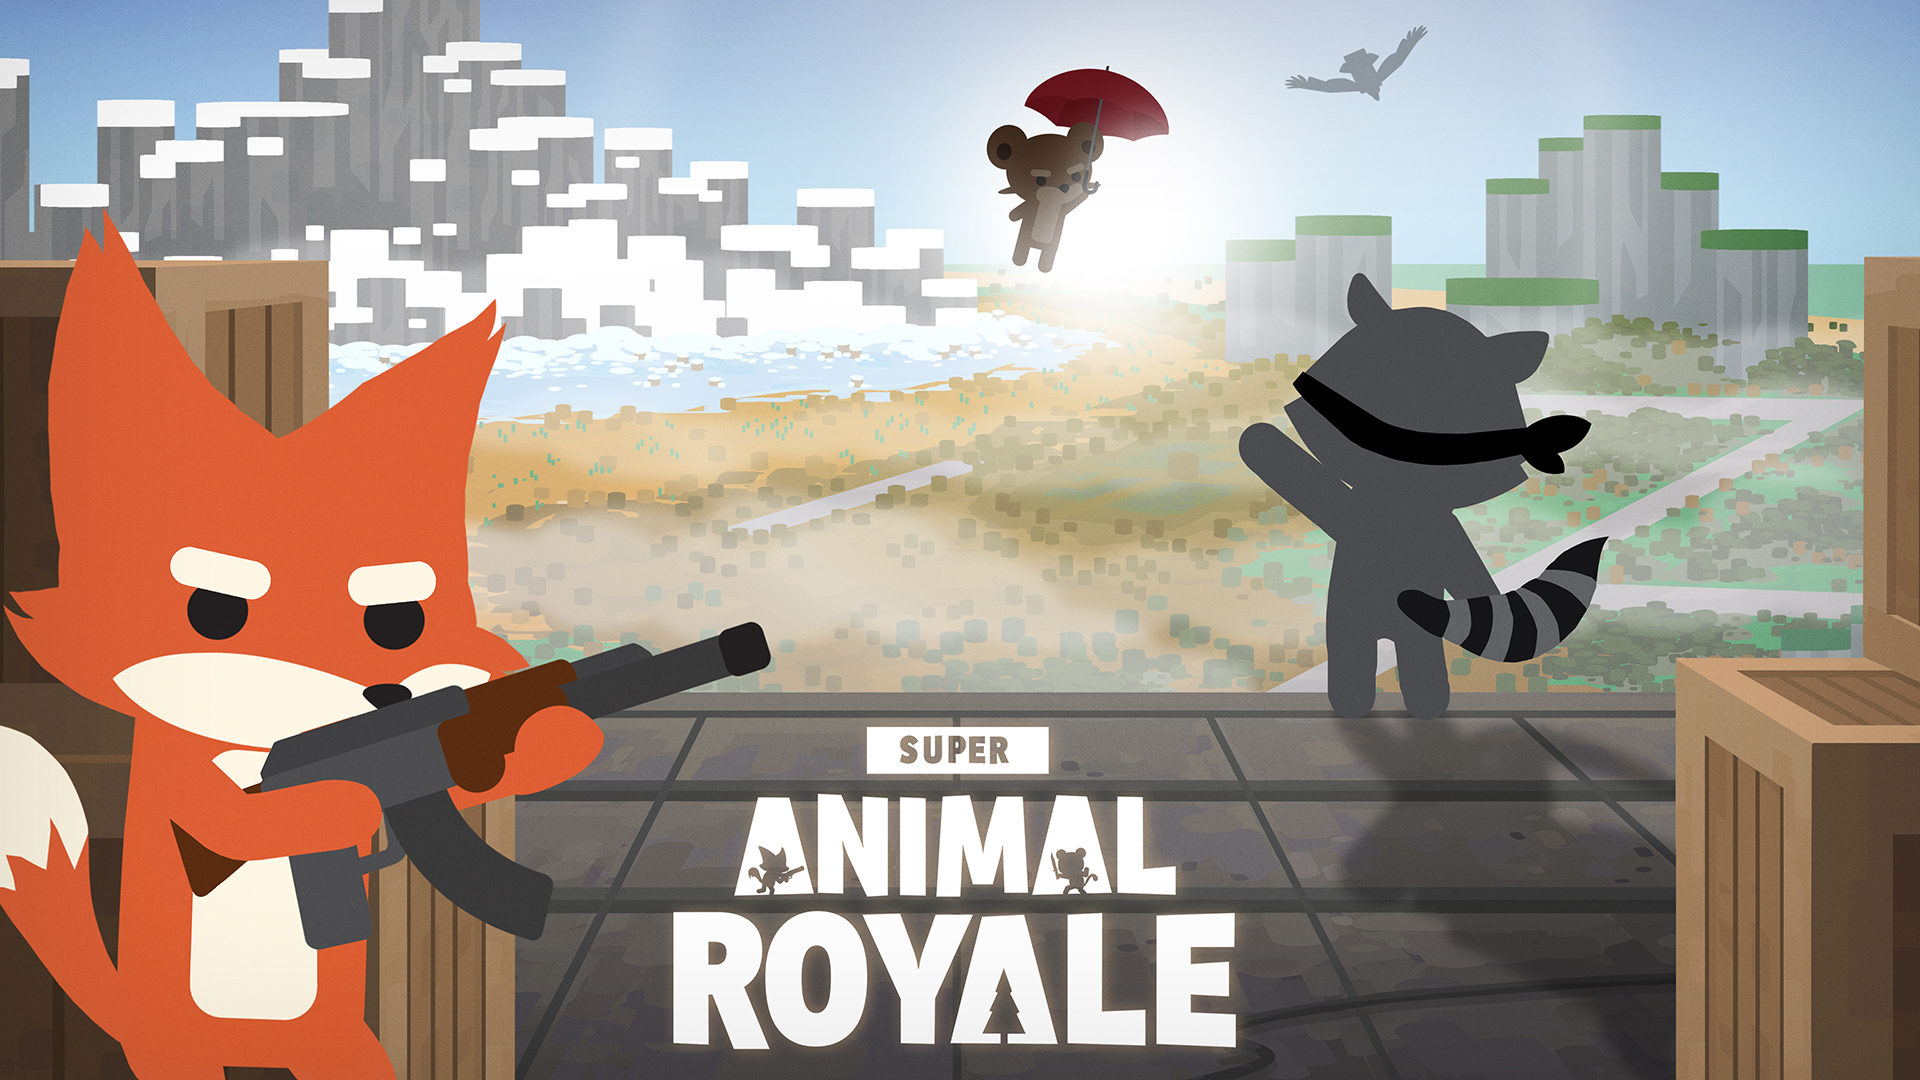 super animal royale, video game